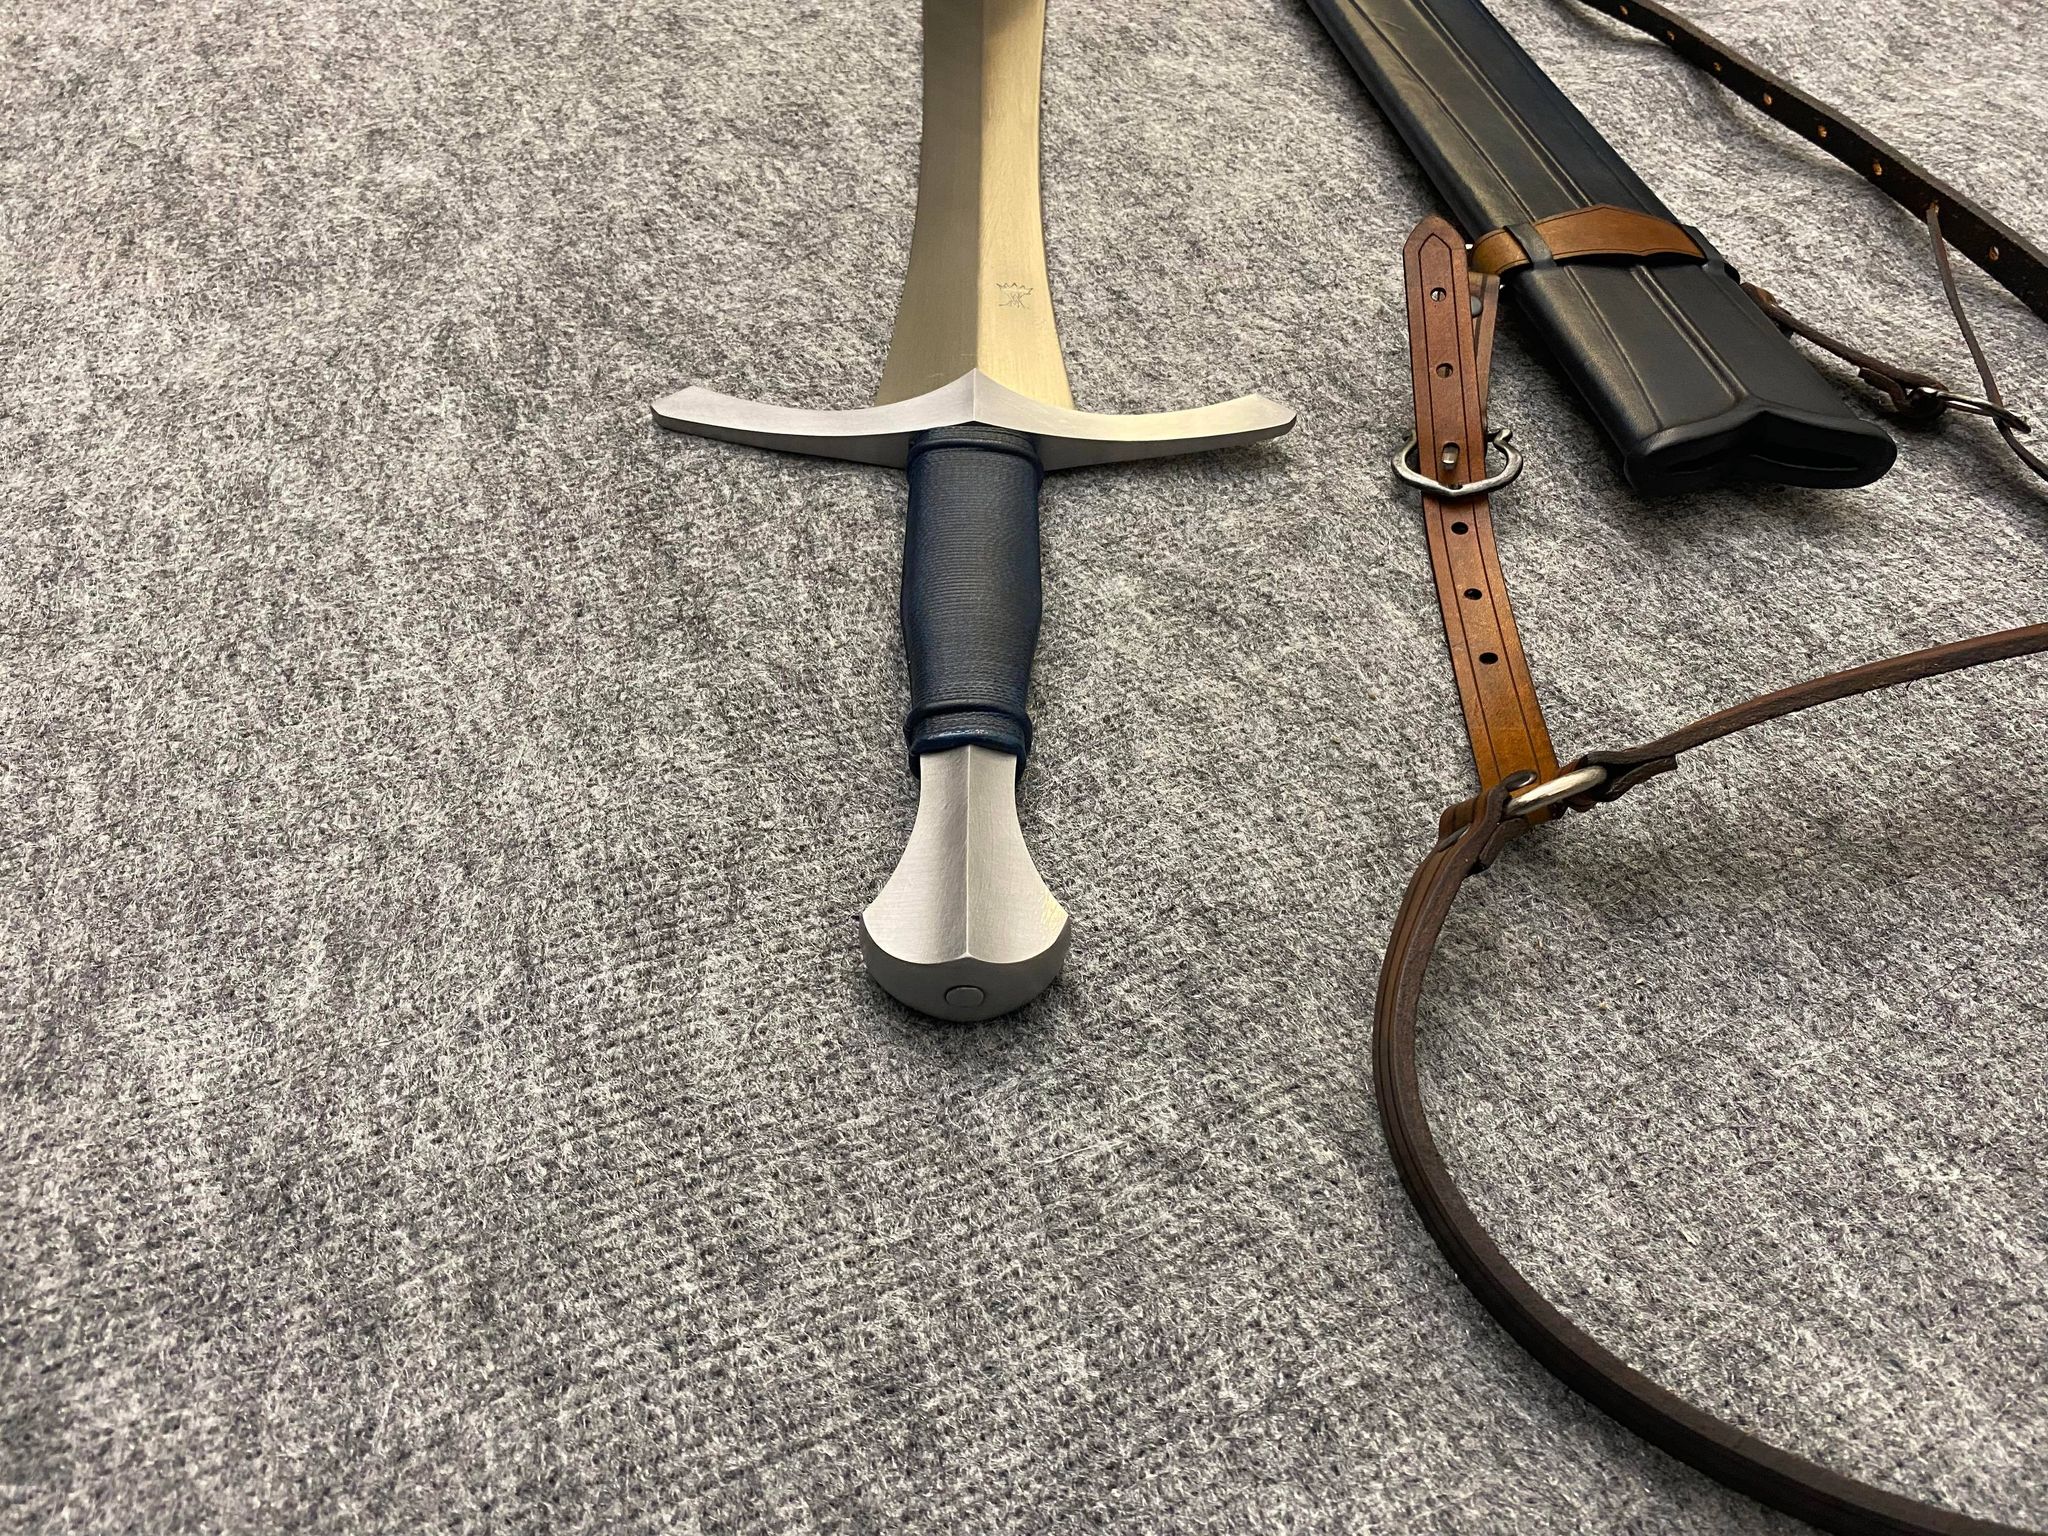 VA-312-Craftsman Series - The Short Leaf Blade Sword